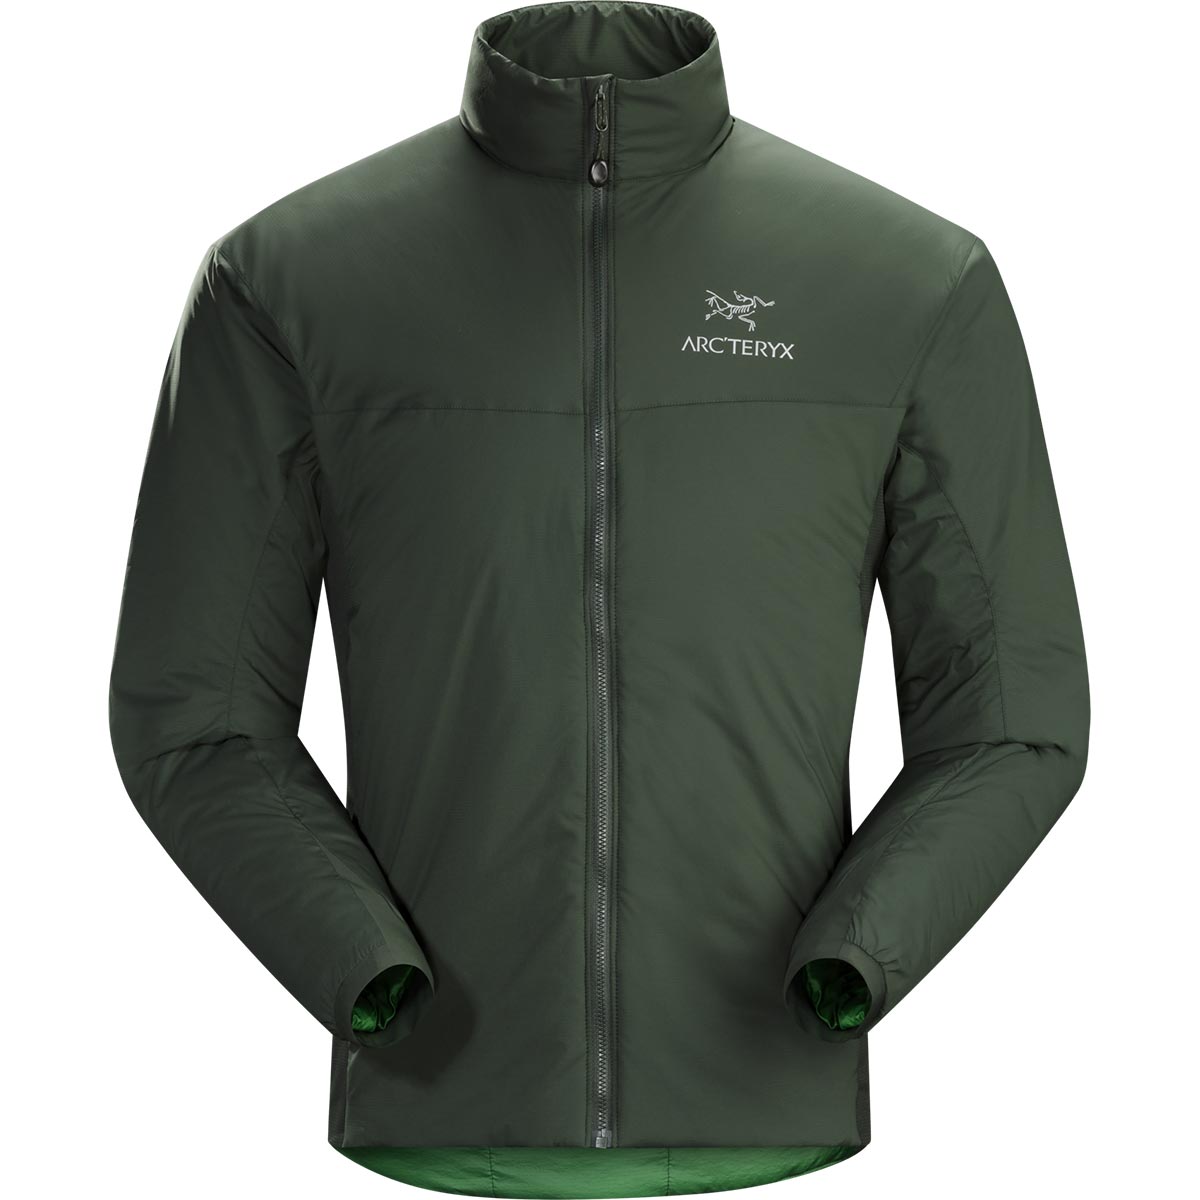 Arc'teryx Atom LT Jacket, men's, discontinued Spring 2019 colors (free ...